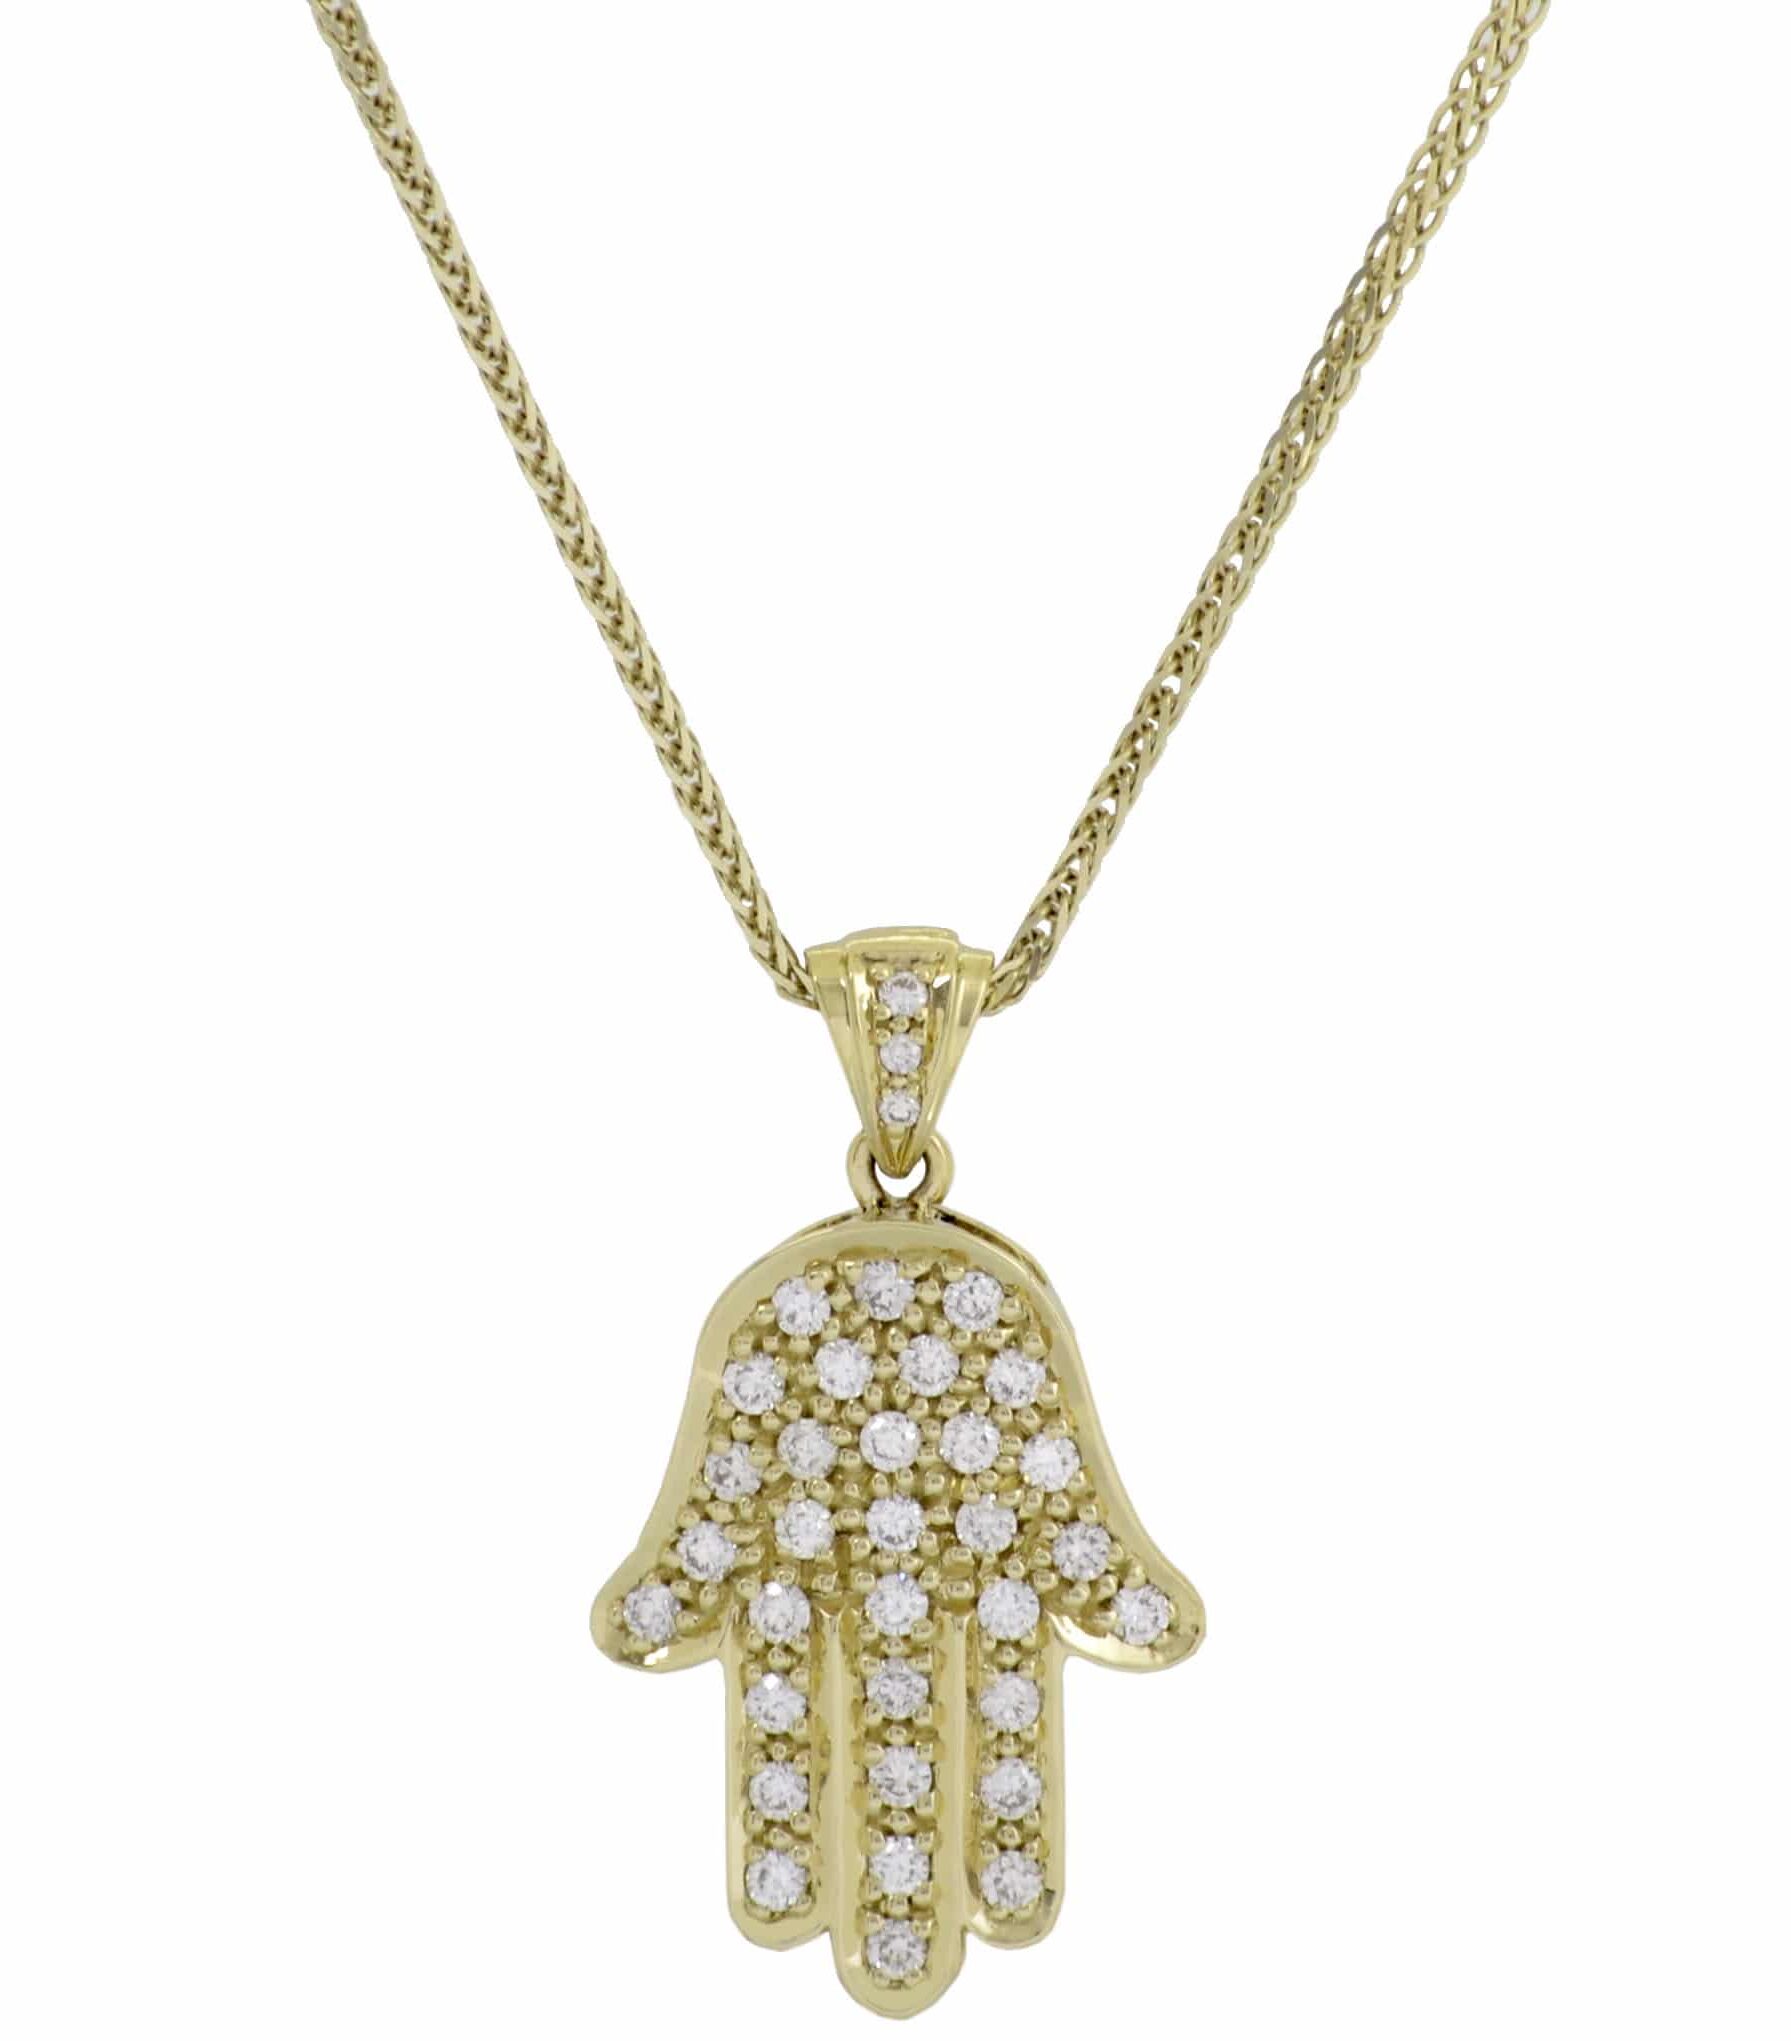 White Hamsa Necklace with Several Shiny Diamonds